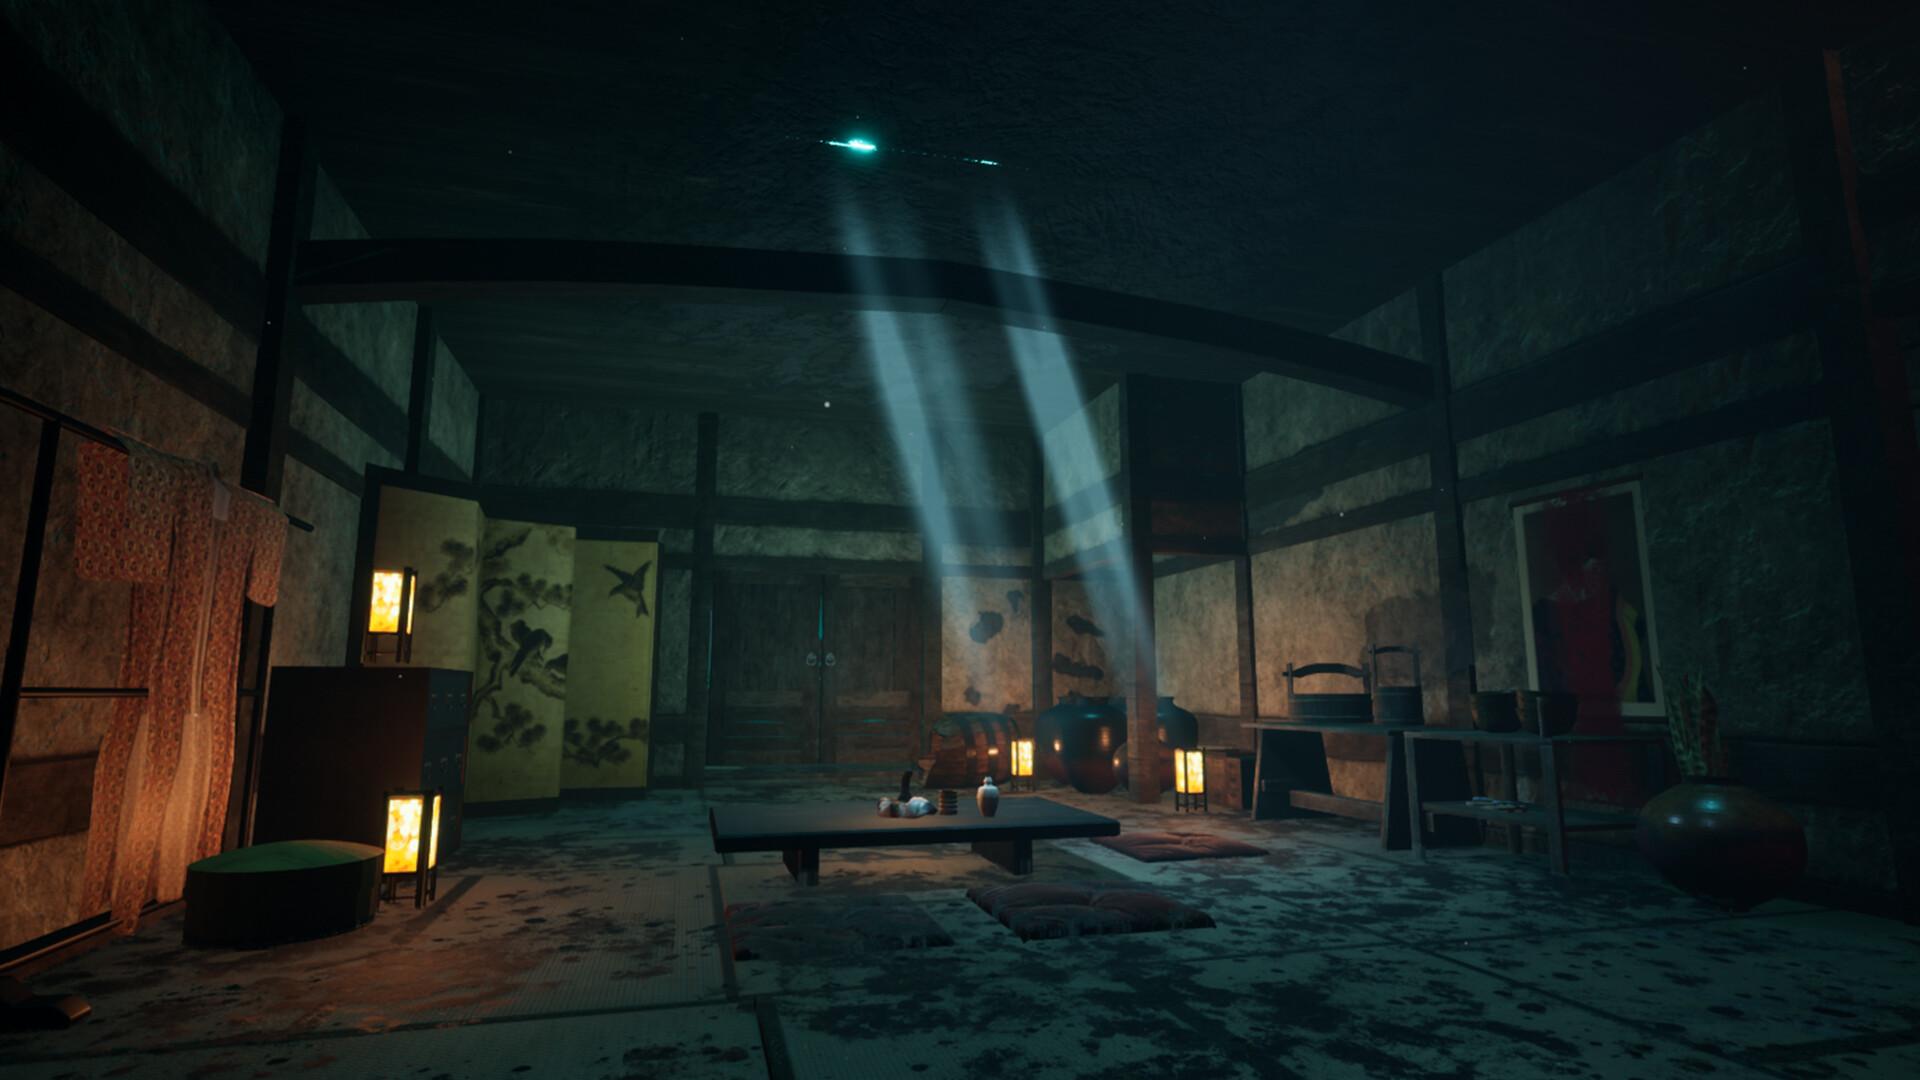 Screenshot №6 from game Malice